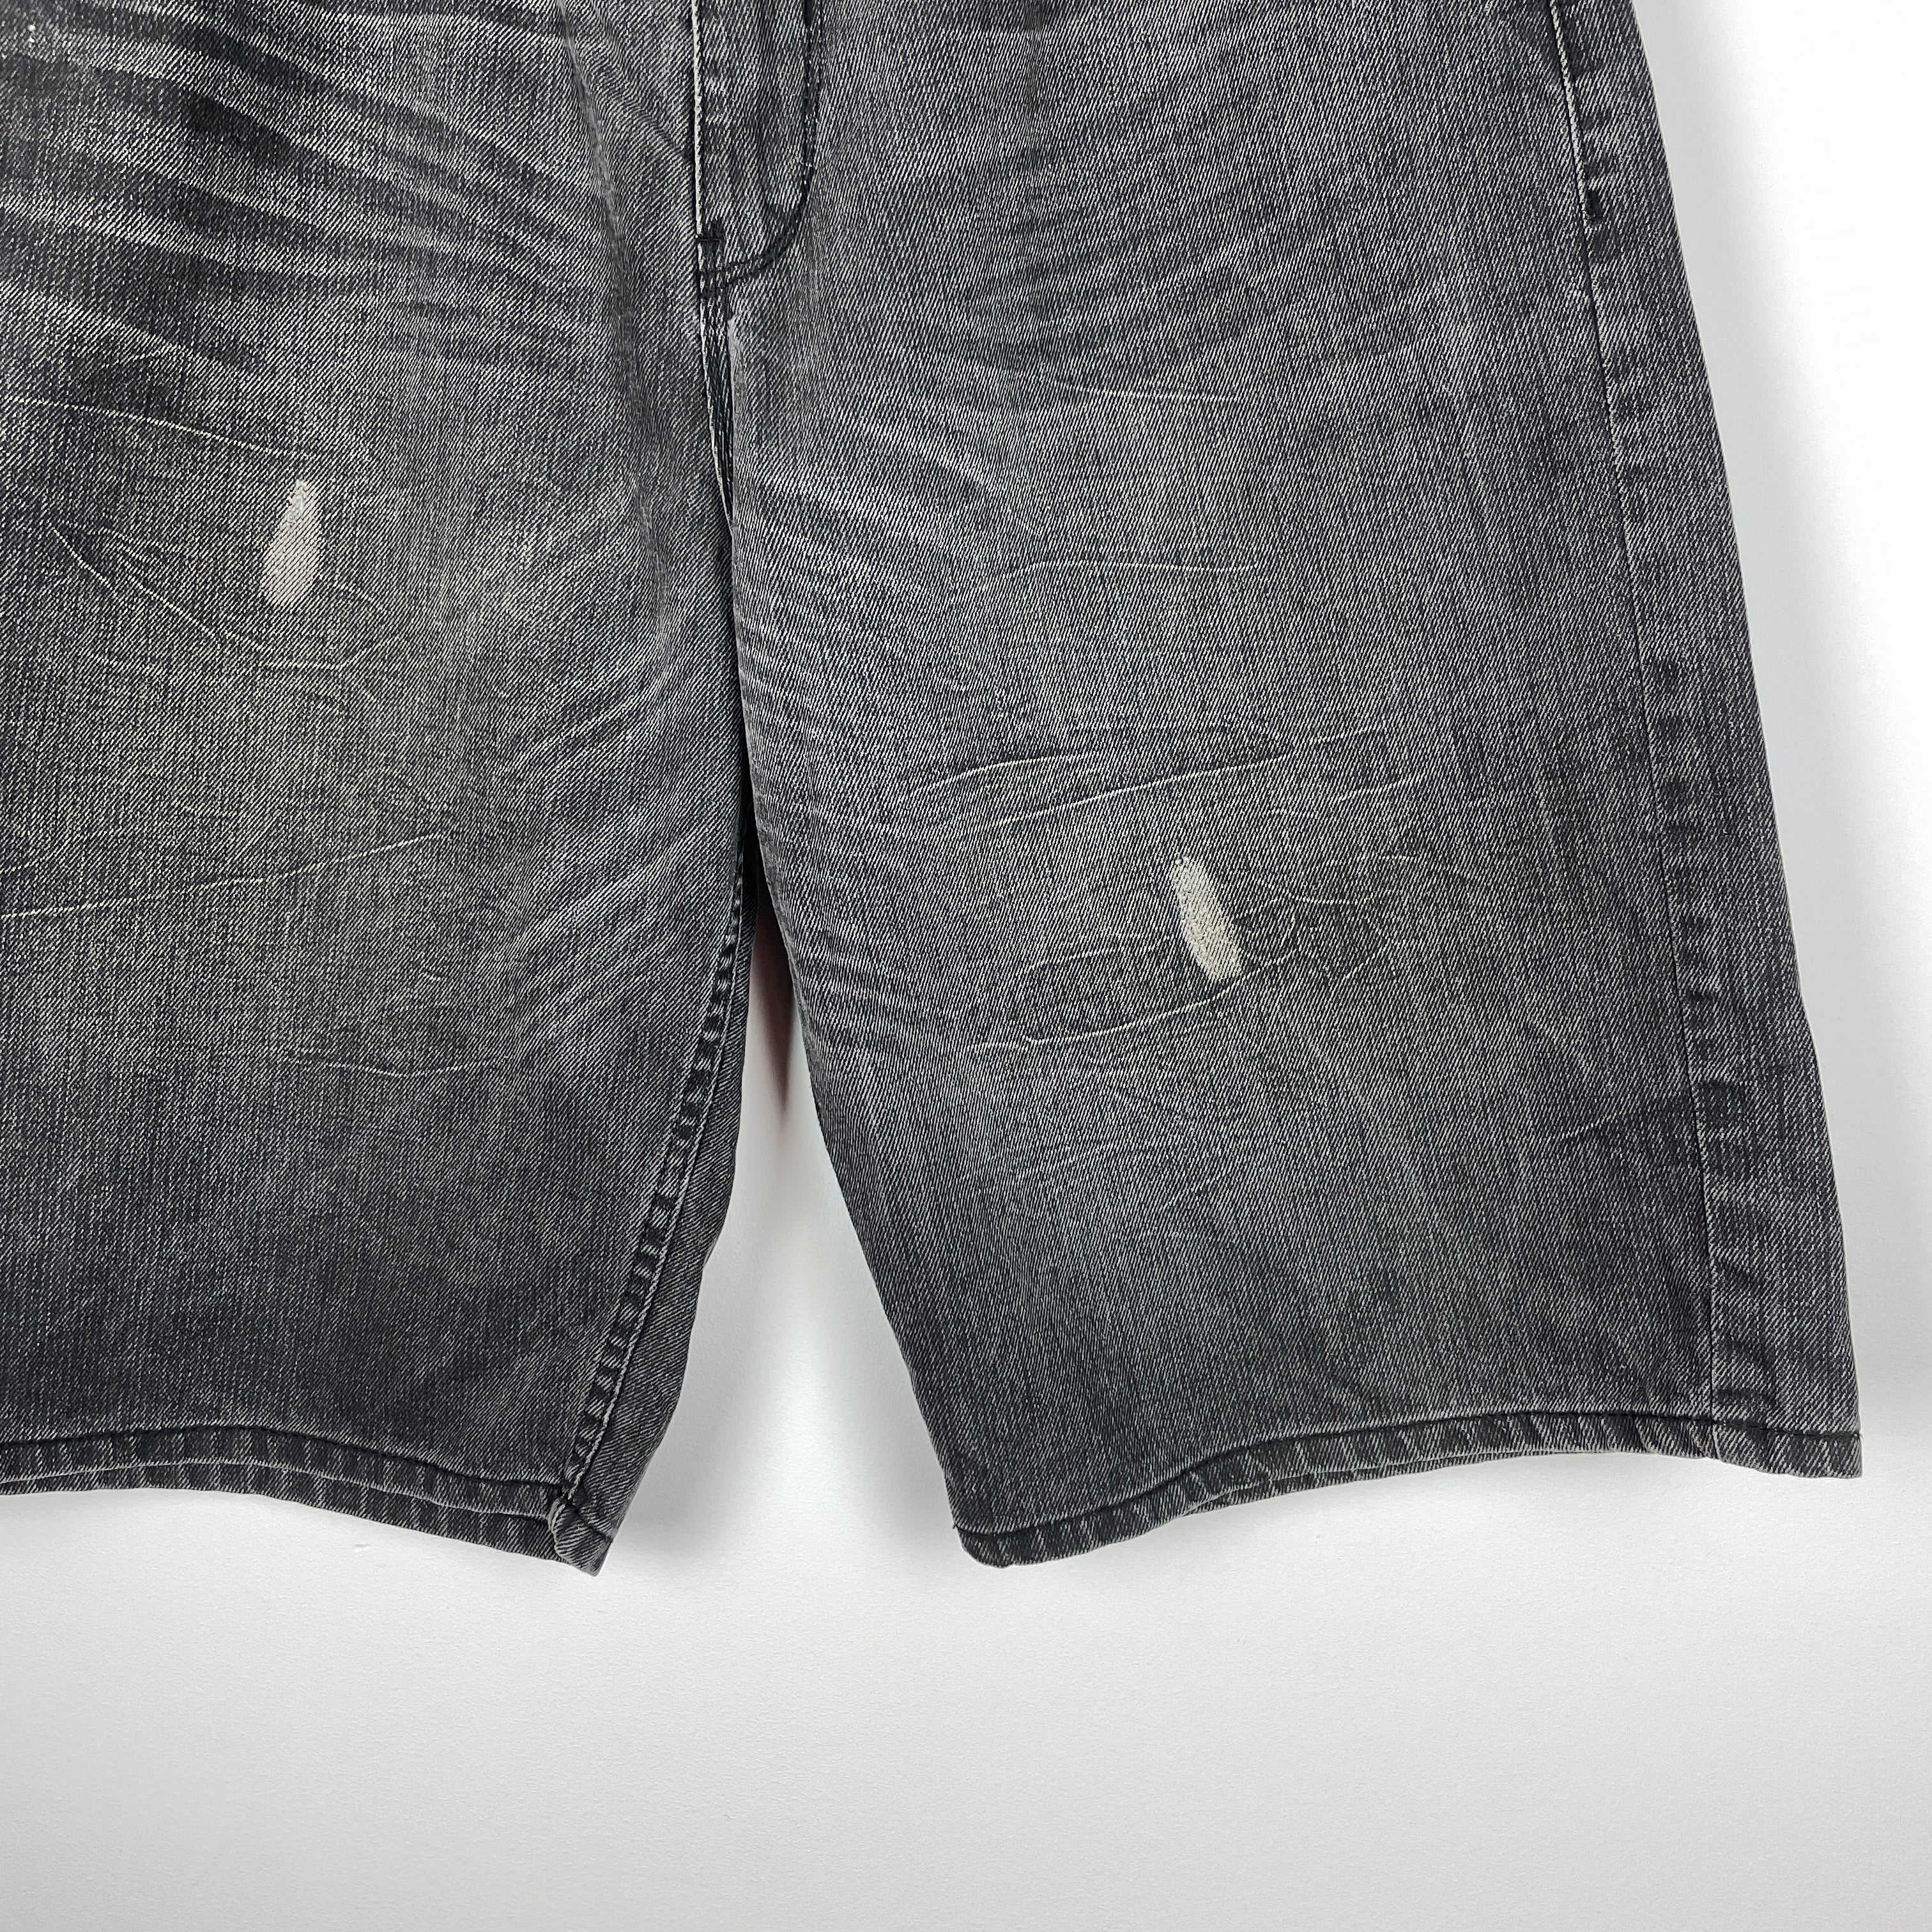 Rocawear Denim Shorts - Men's 38